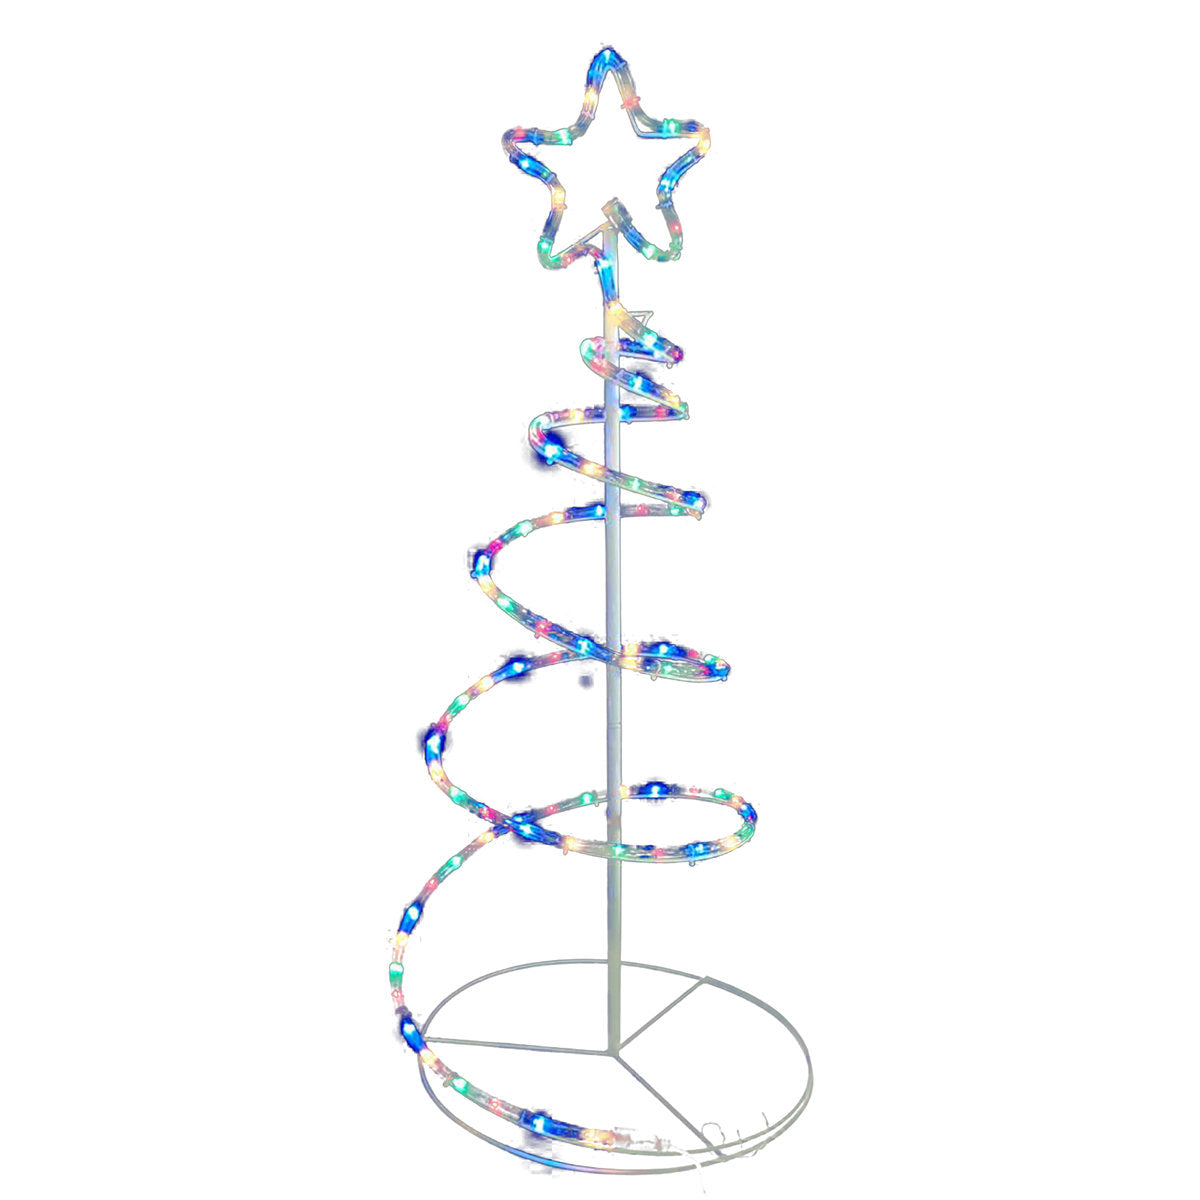 Stockholm Solar Rope Light Spiral Christmas Tree Traditional Lit Xmas Decor Indoor 90cm